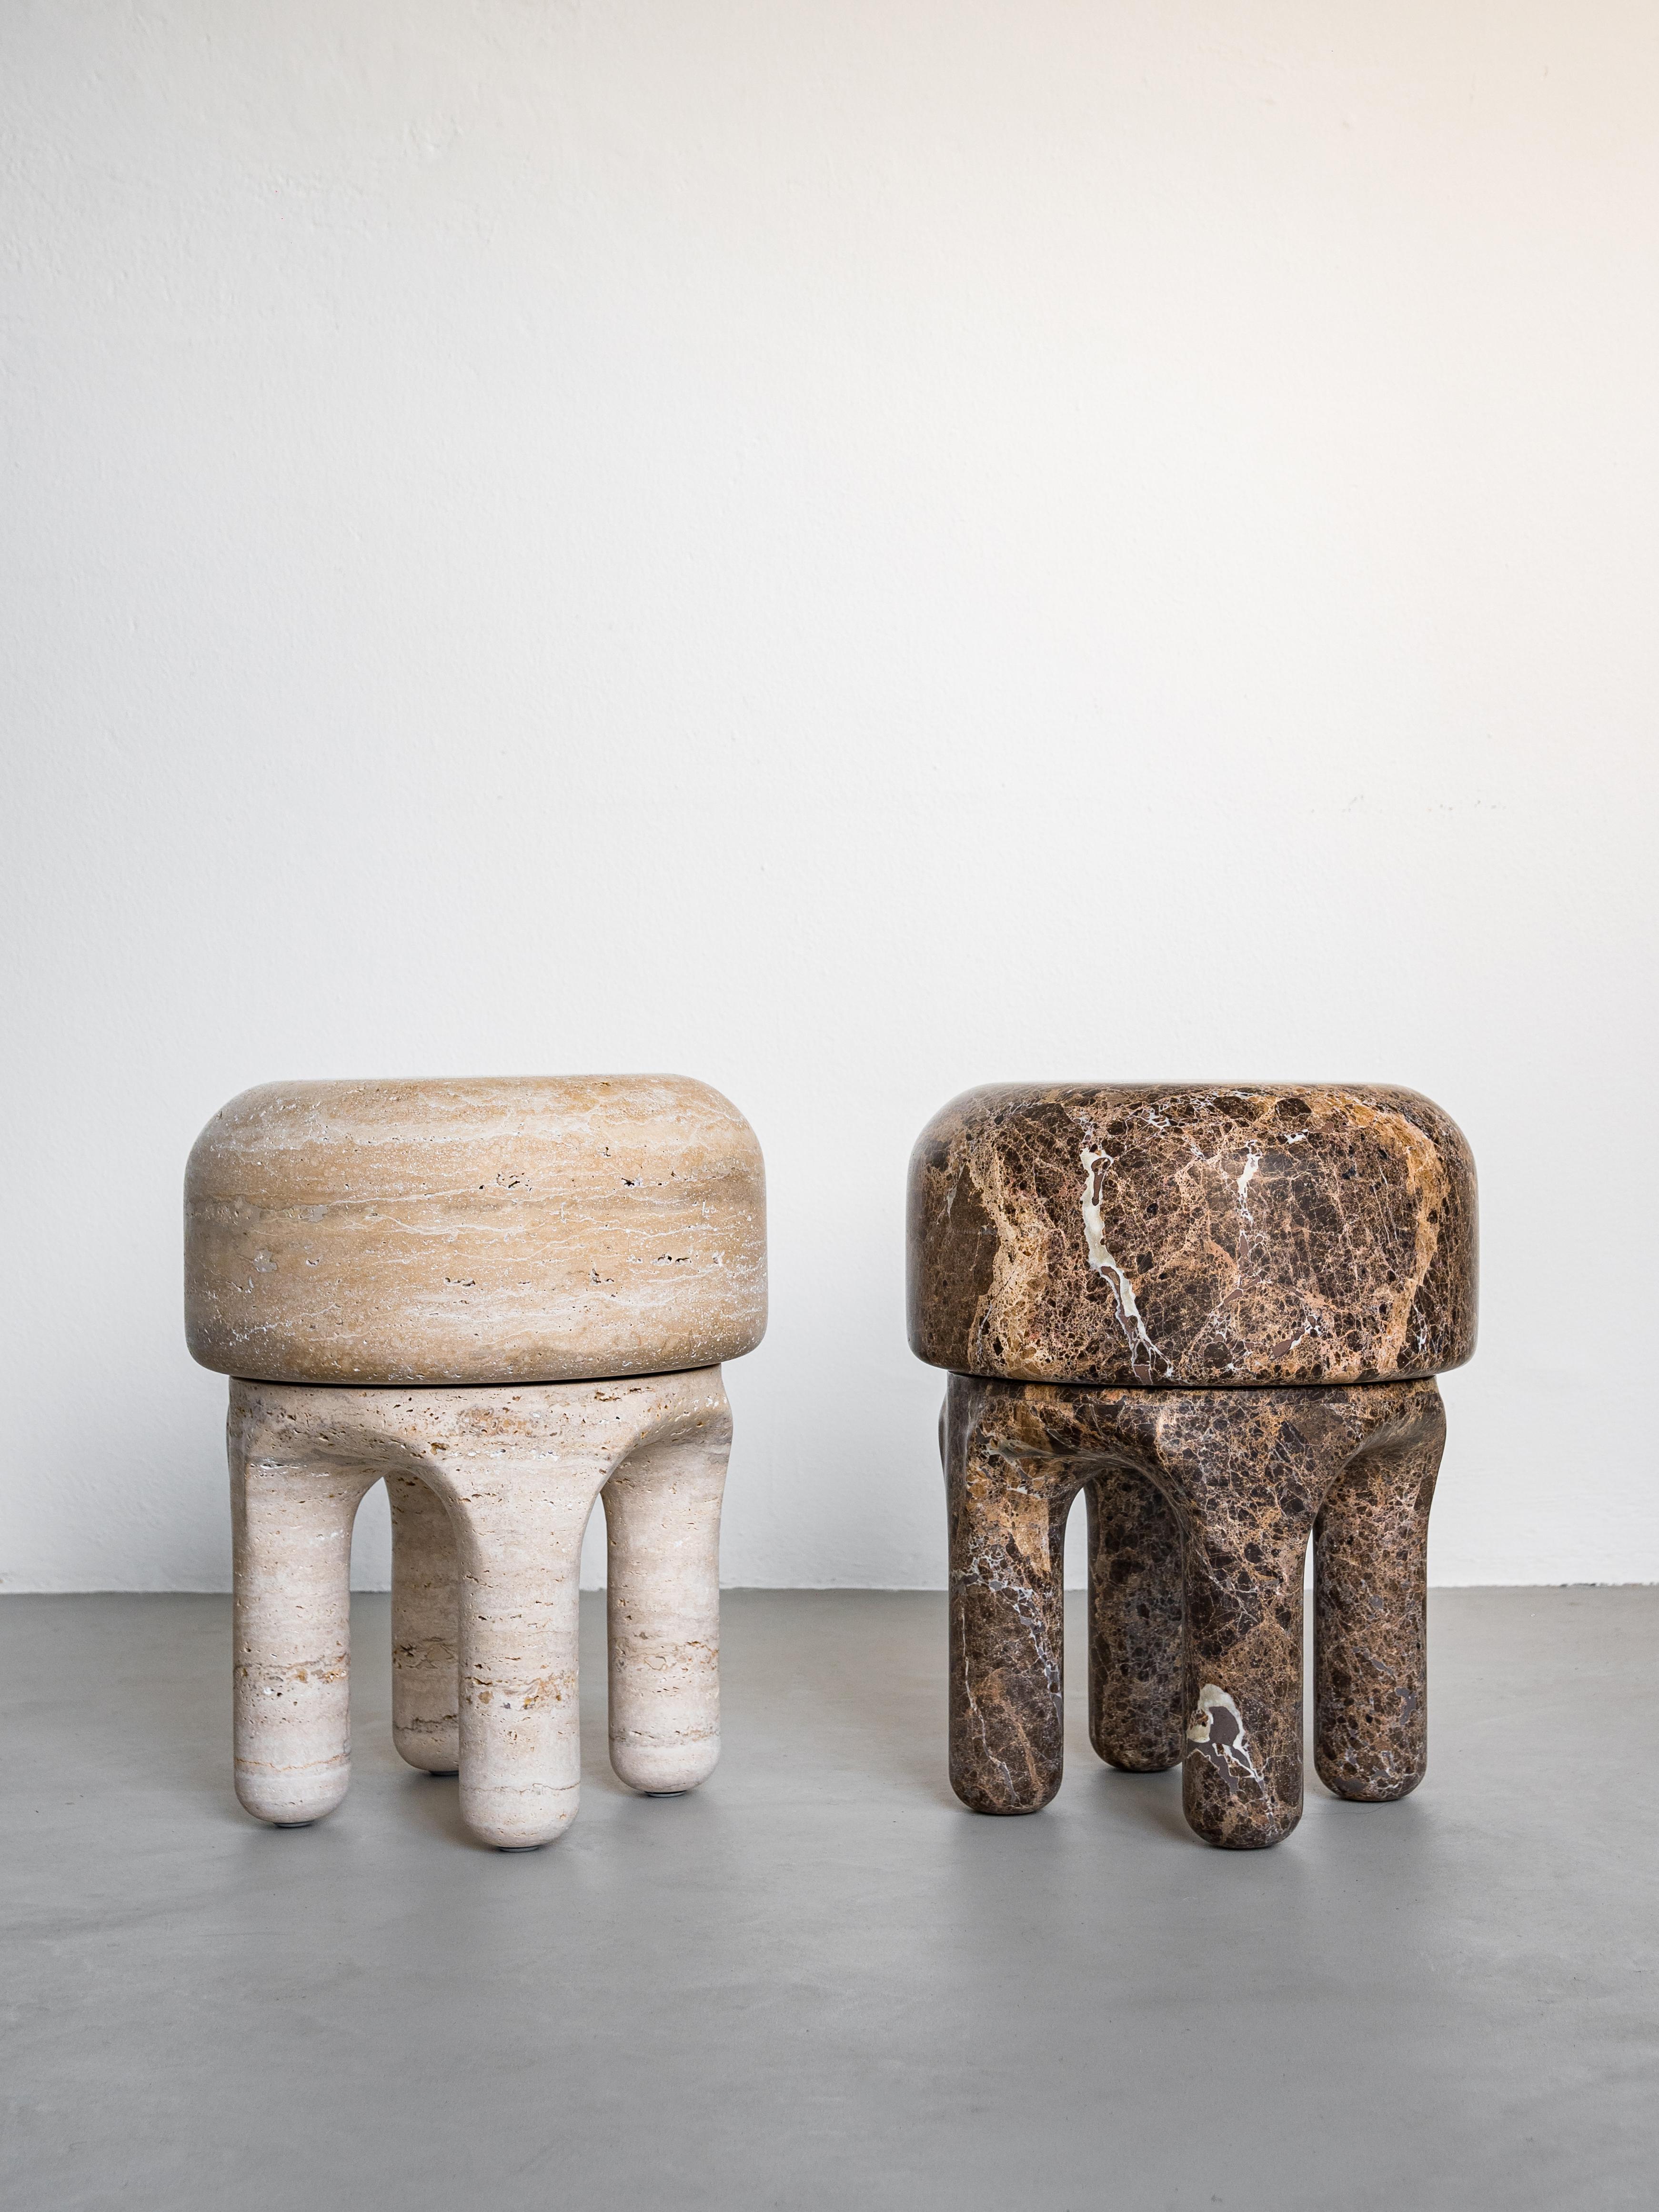 Organic Modern Stool Table Sculpture in Travertine - Urban Wabi Style For Sale 1